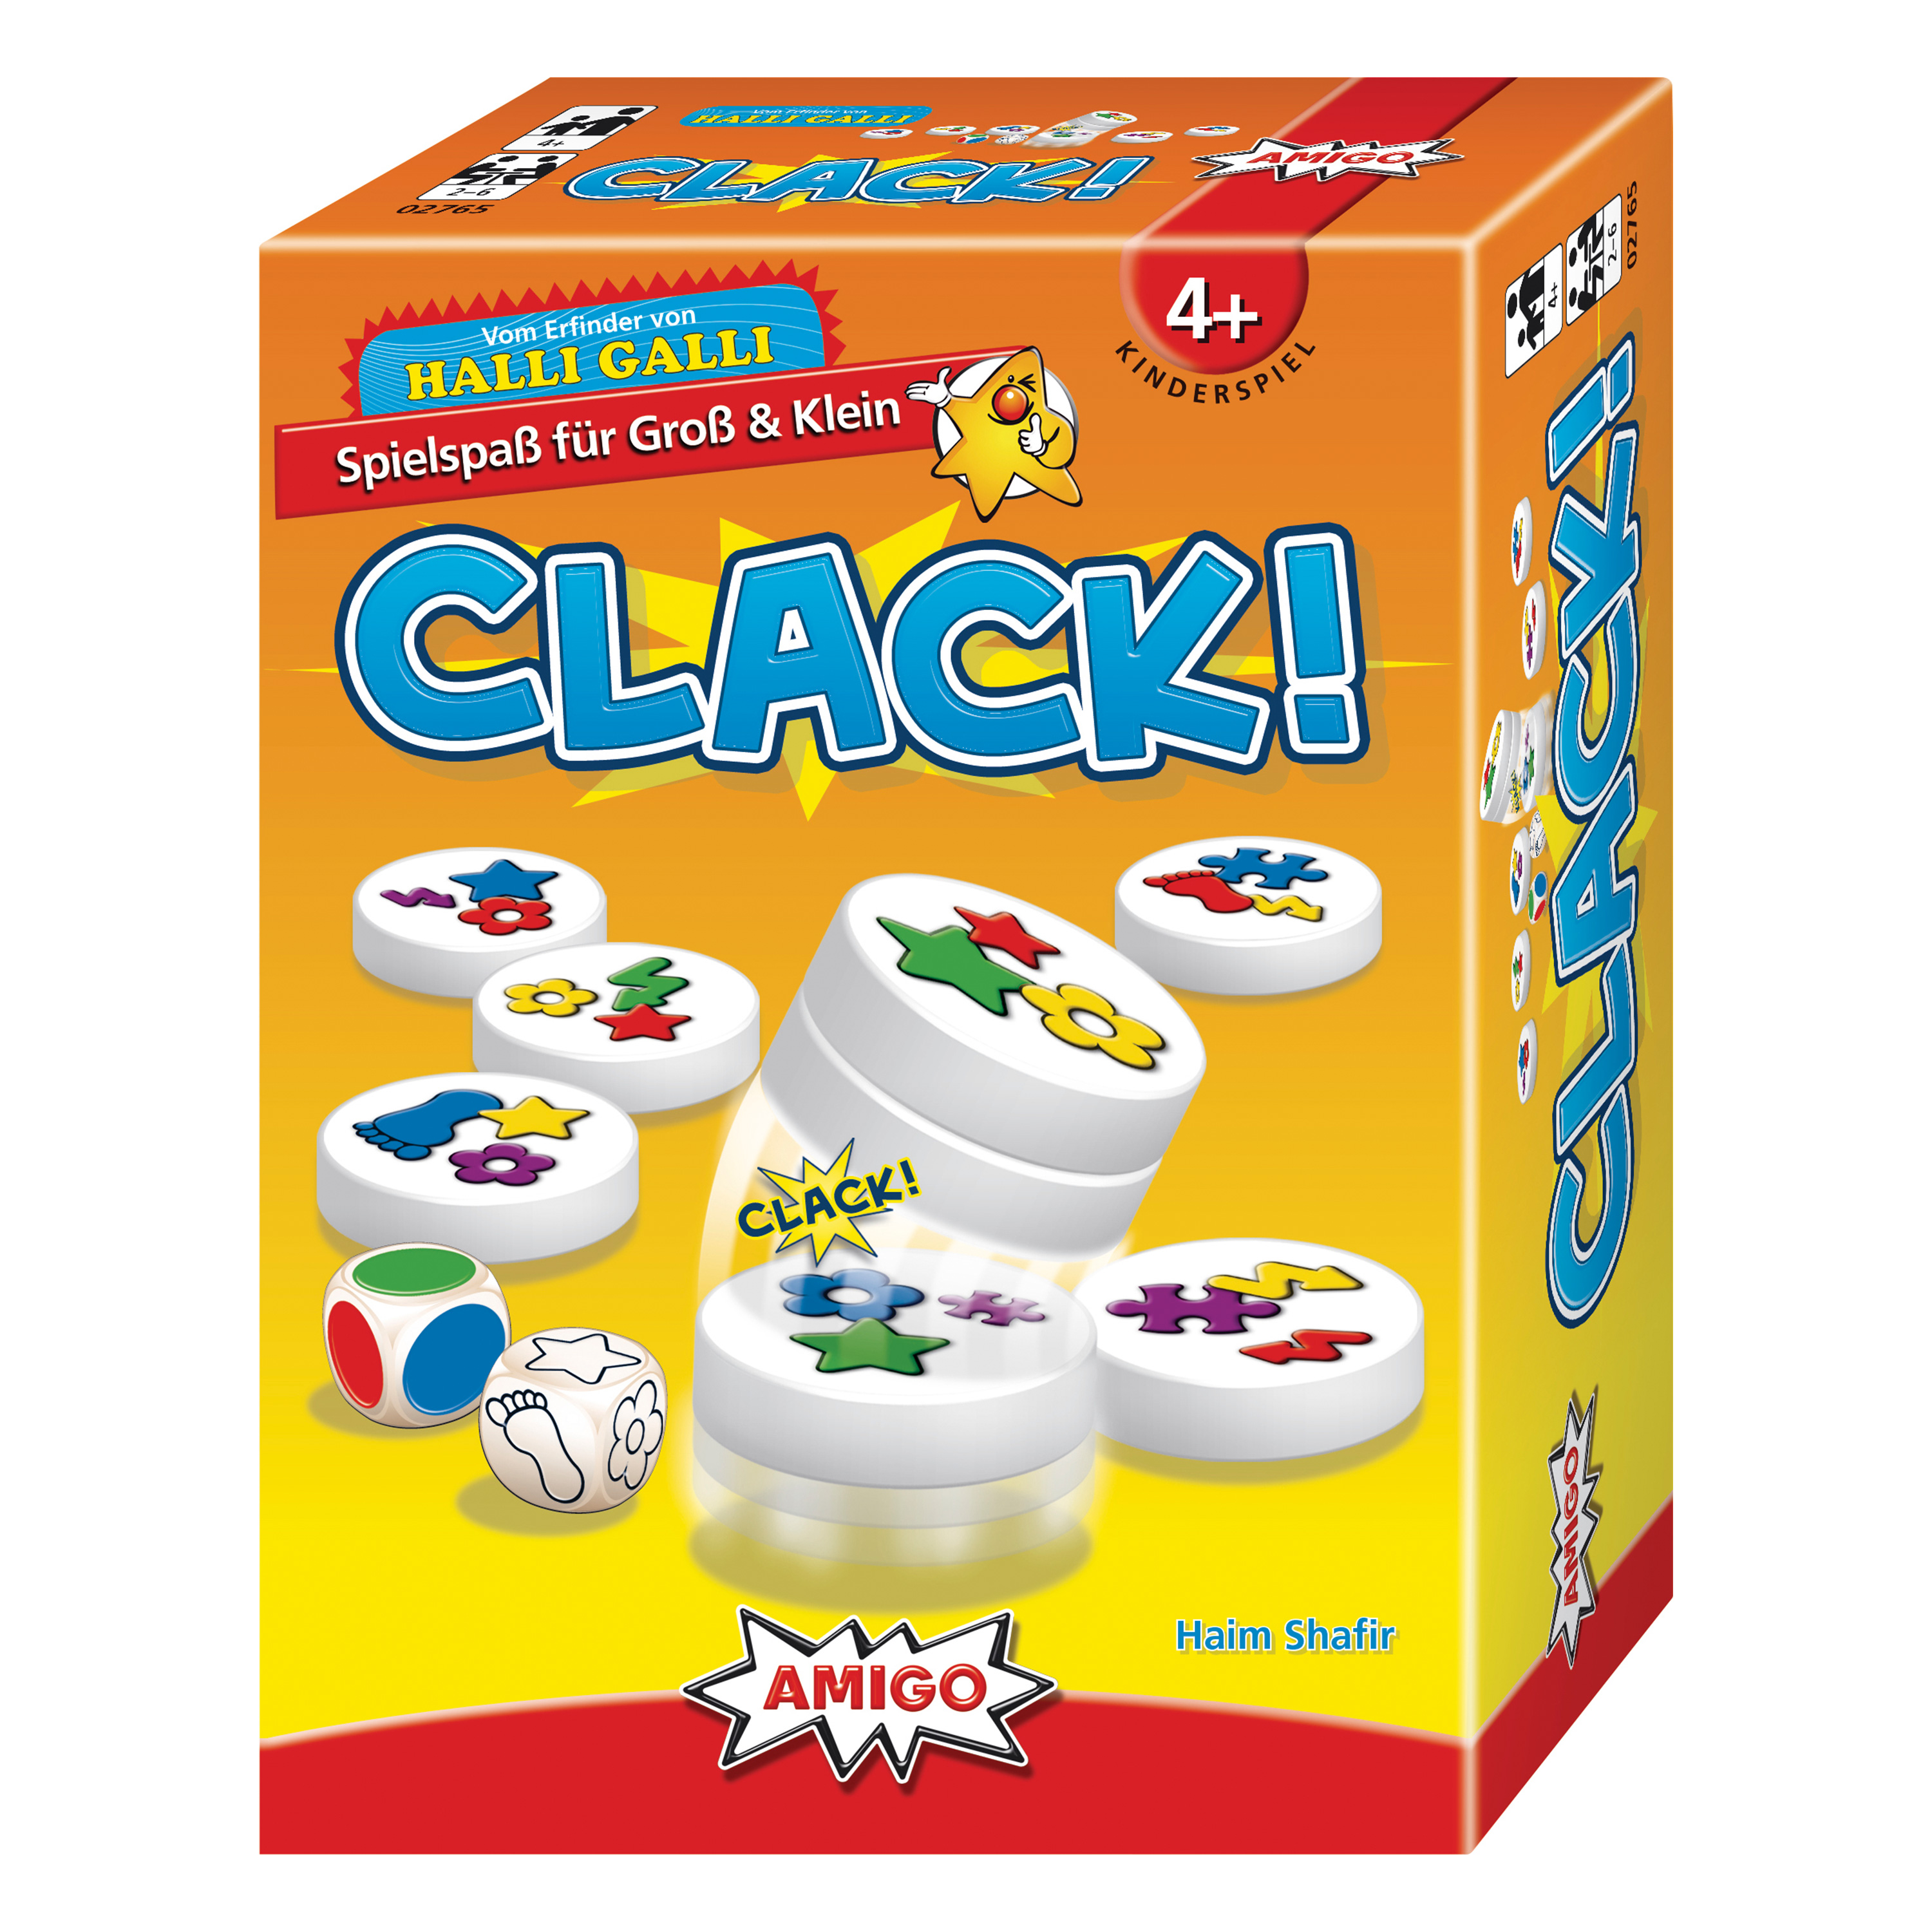 Clack!, Reaktionsspiel mit Magneten